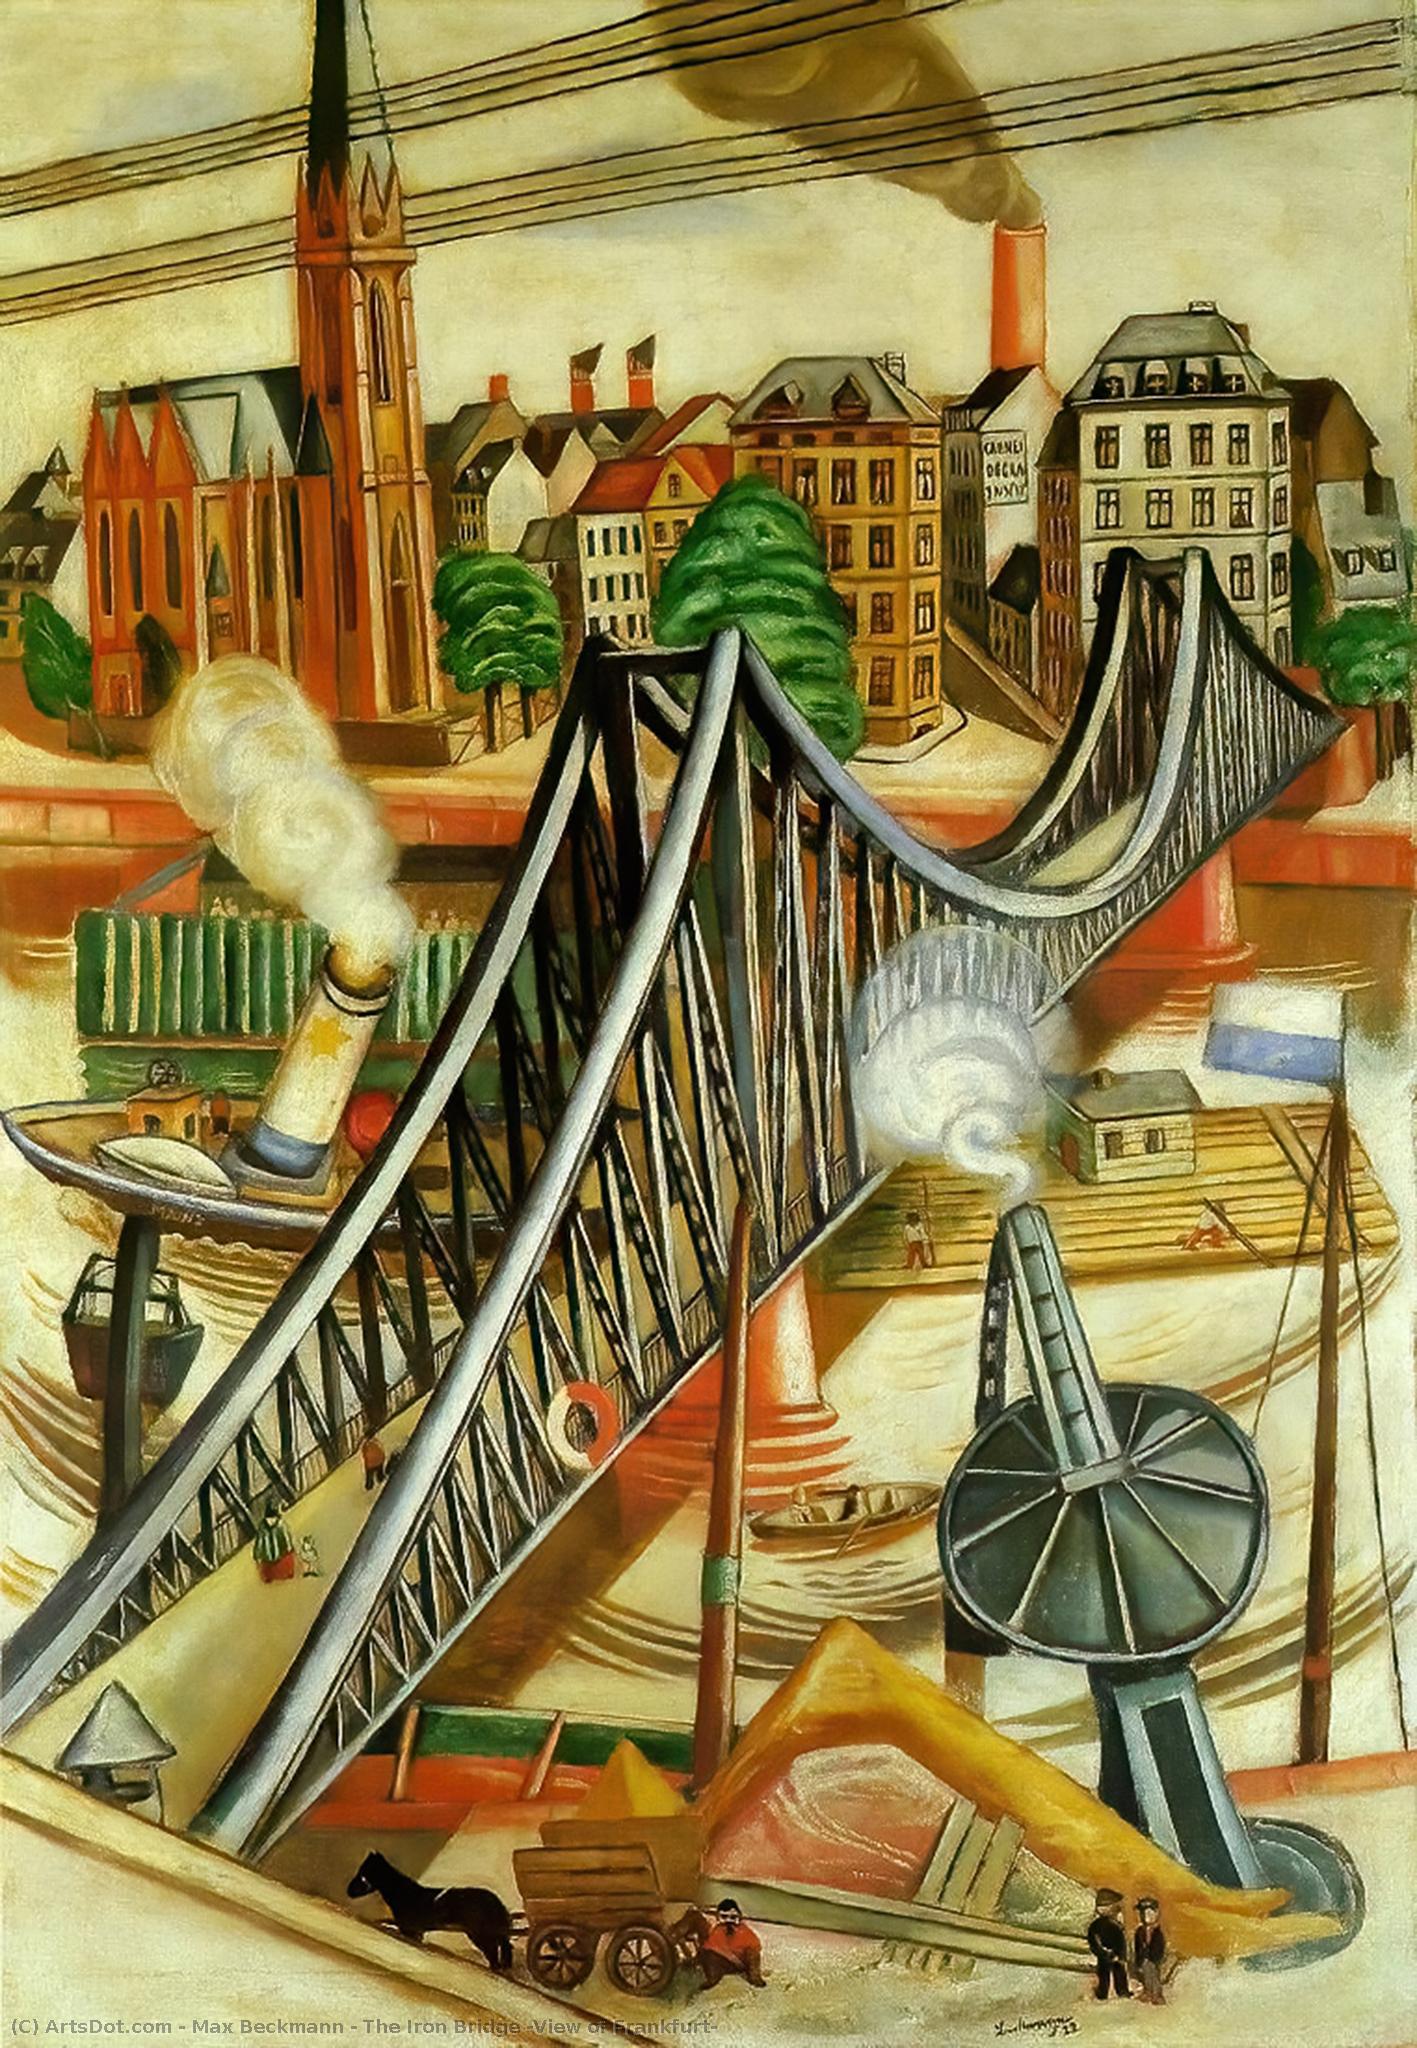 Order Paintings Reproductions The Iron Bridge (View of Frankfurt), 1922 by Max Beckmann (1884-1950, Germany) | ArtsDot.com